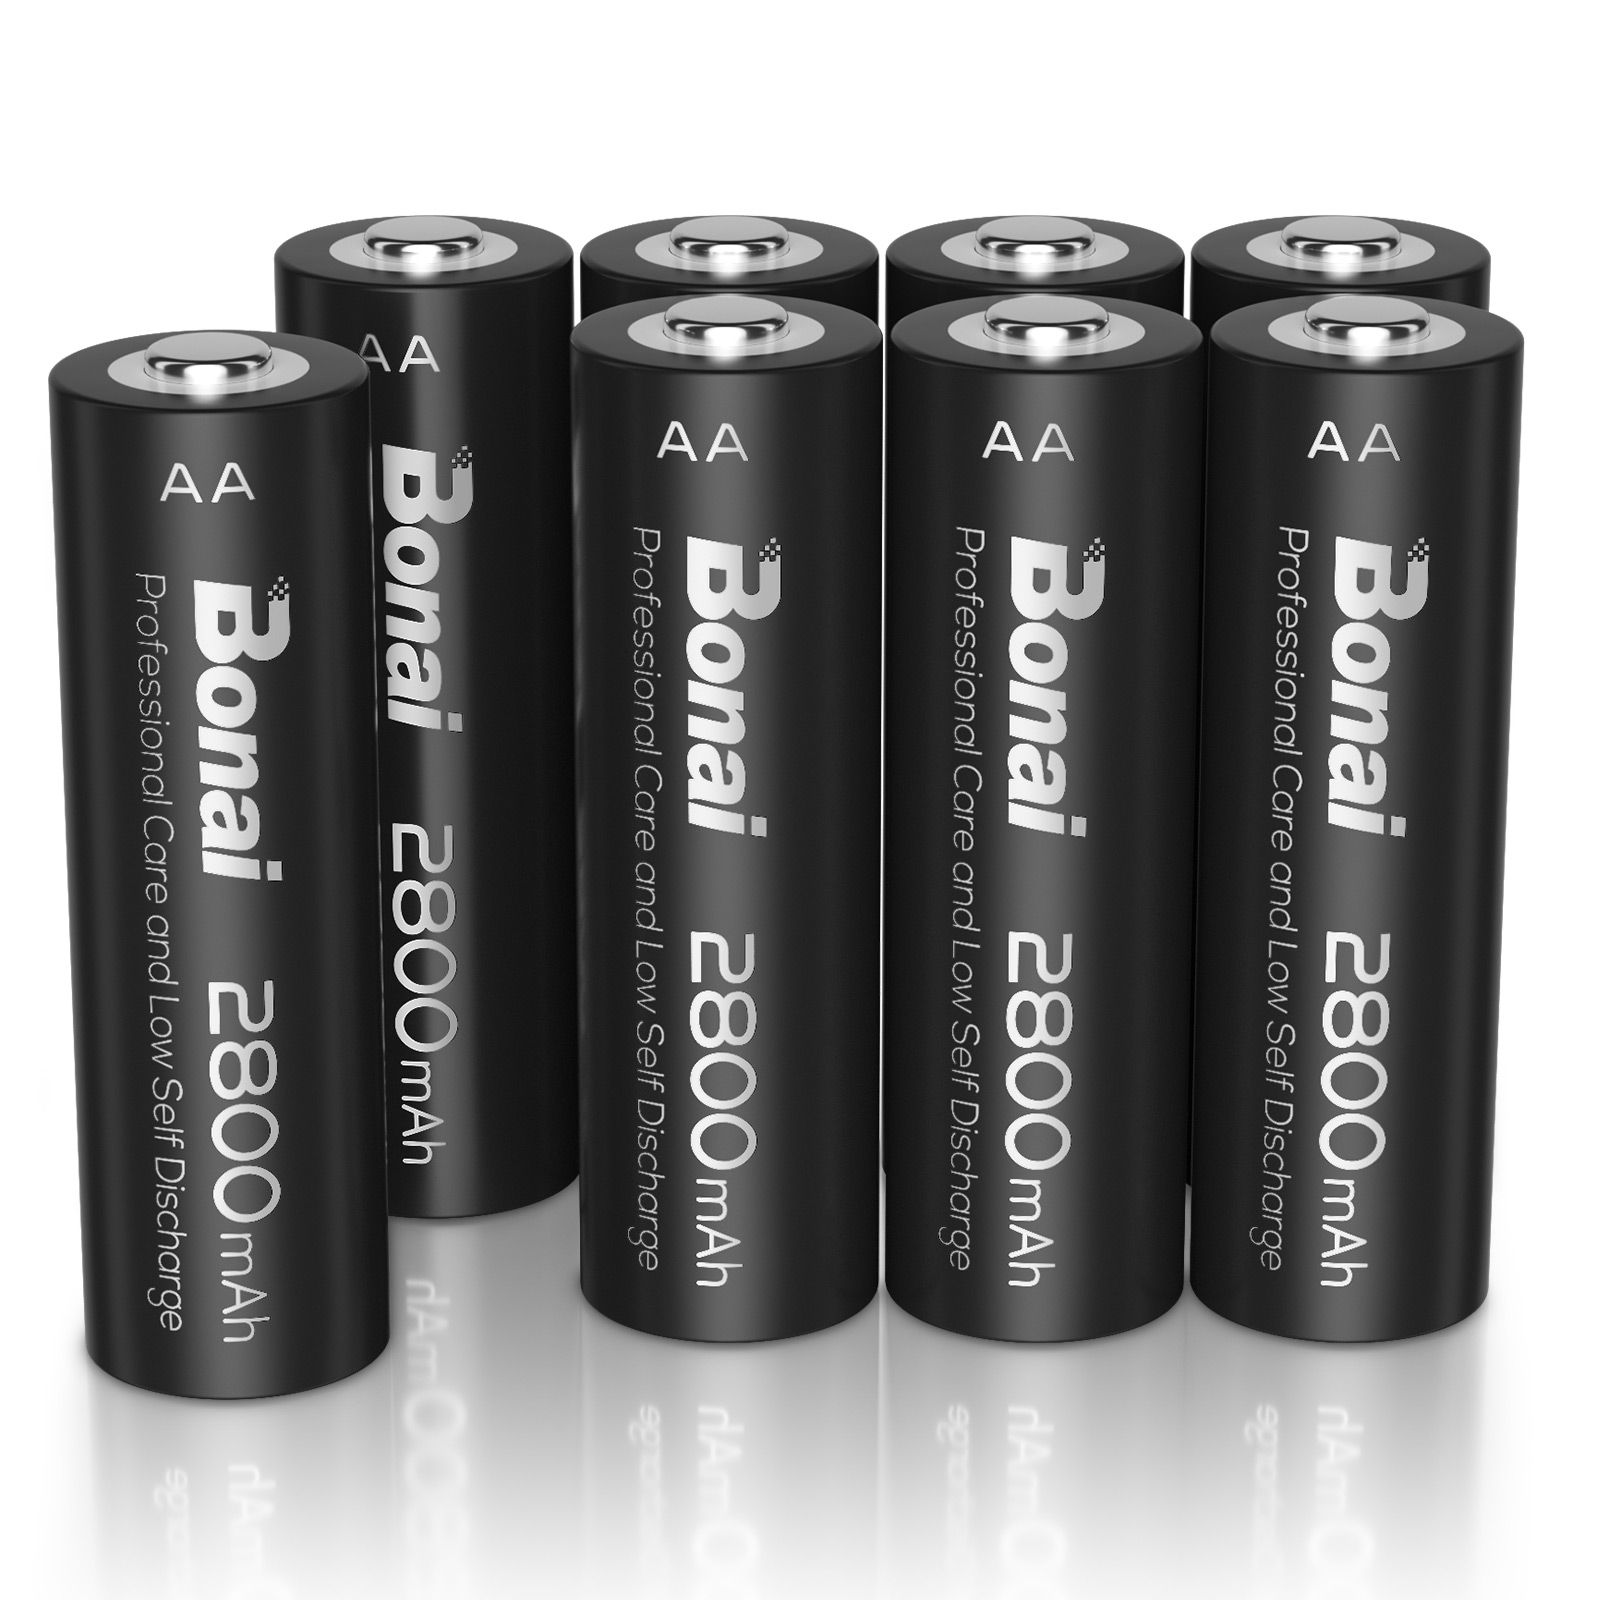 BONAI AA Rechargeable Batteries 2800mAh 1.2V Ni-MH Low Self Discharge (Pack of 8)